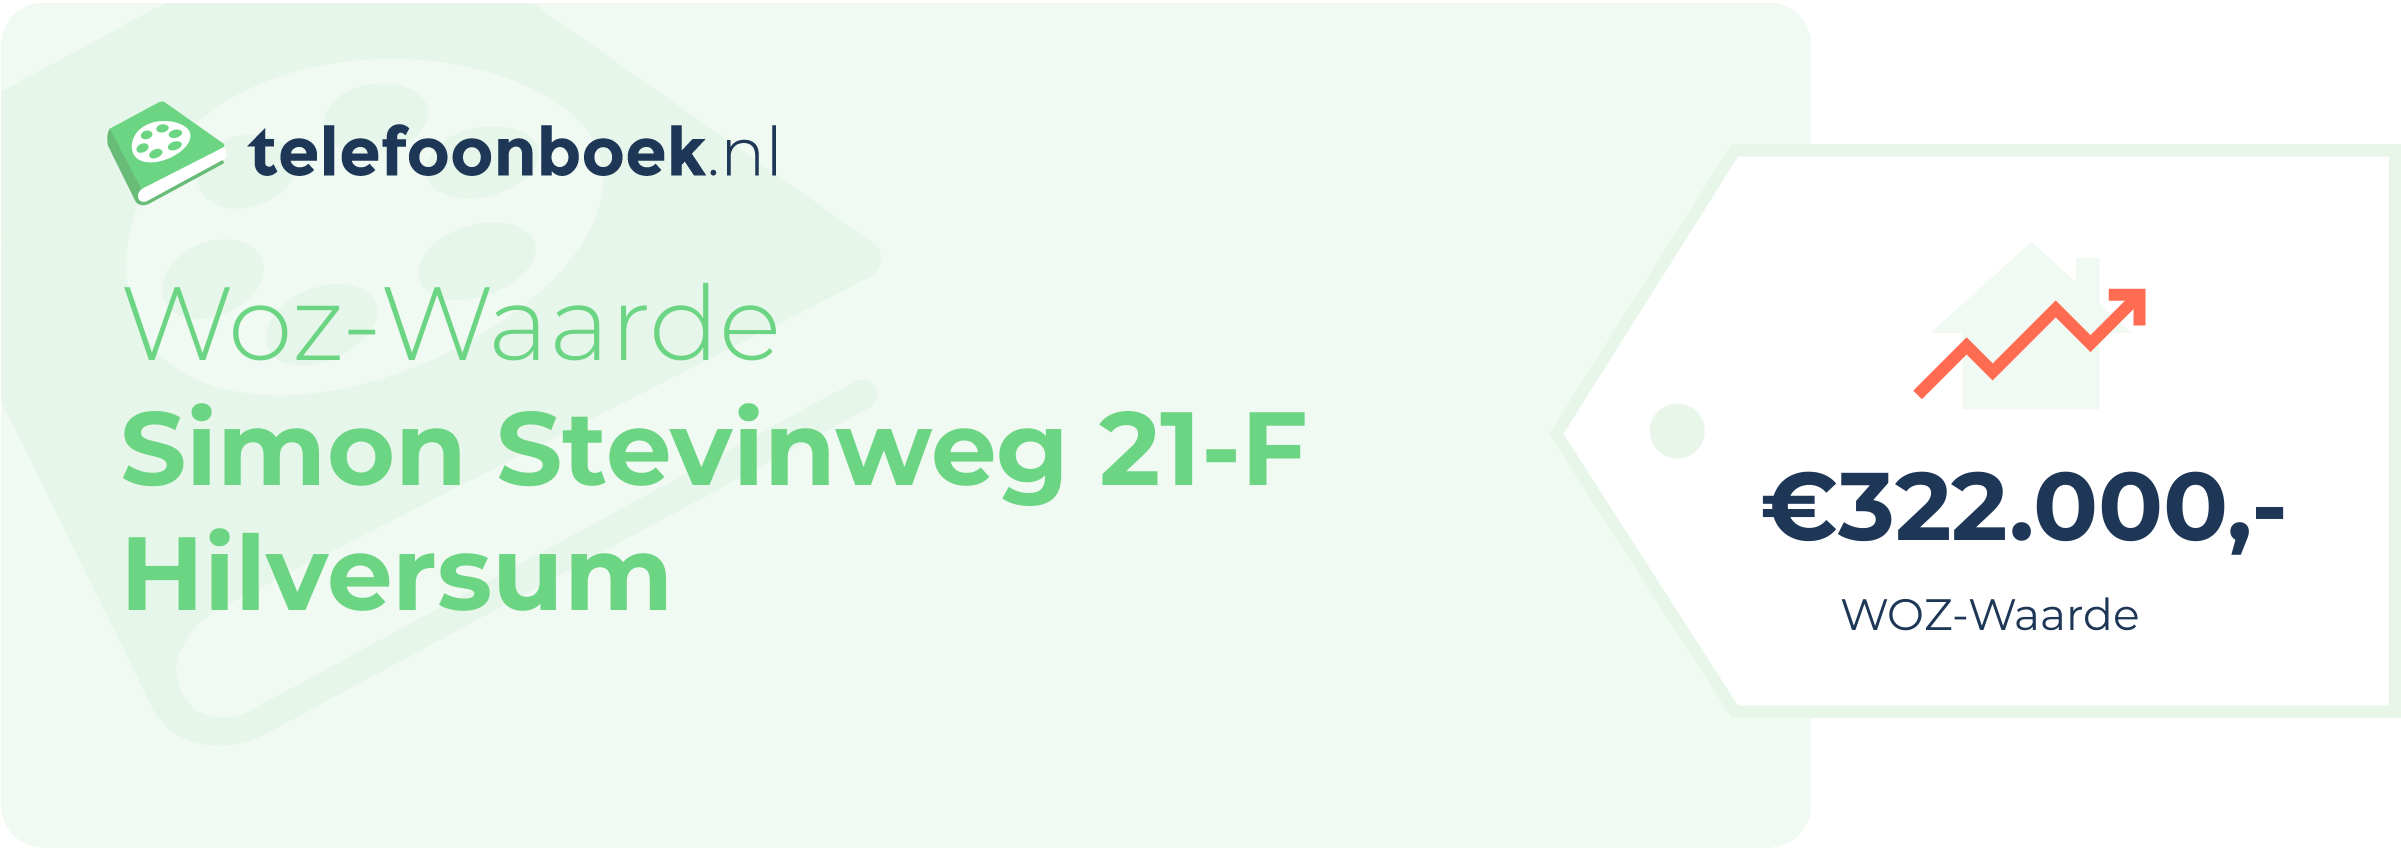 WOZ-waarde Simon Stevinweg 21-F Hilversum